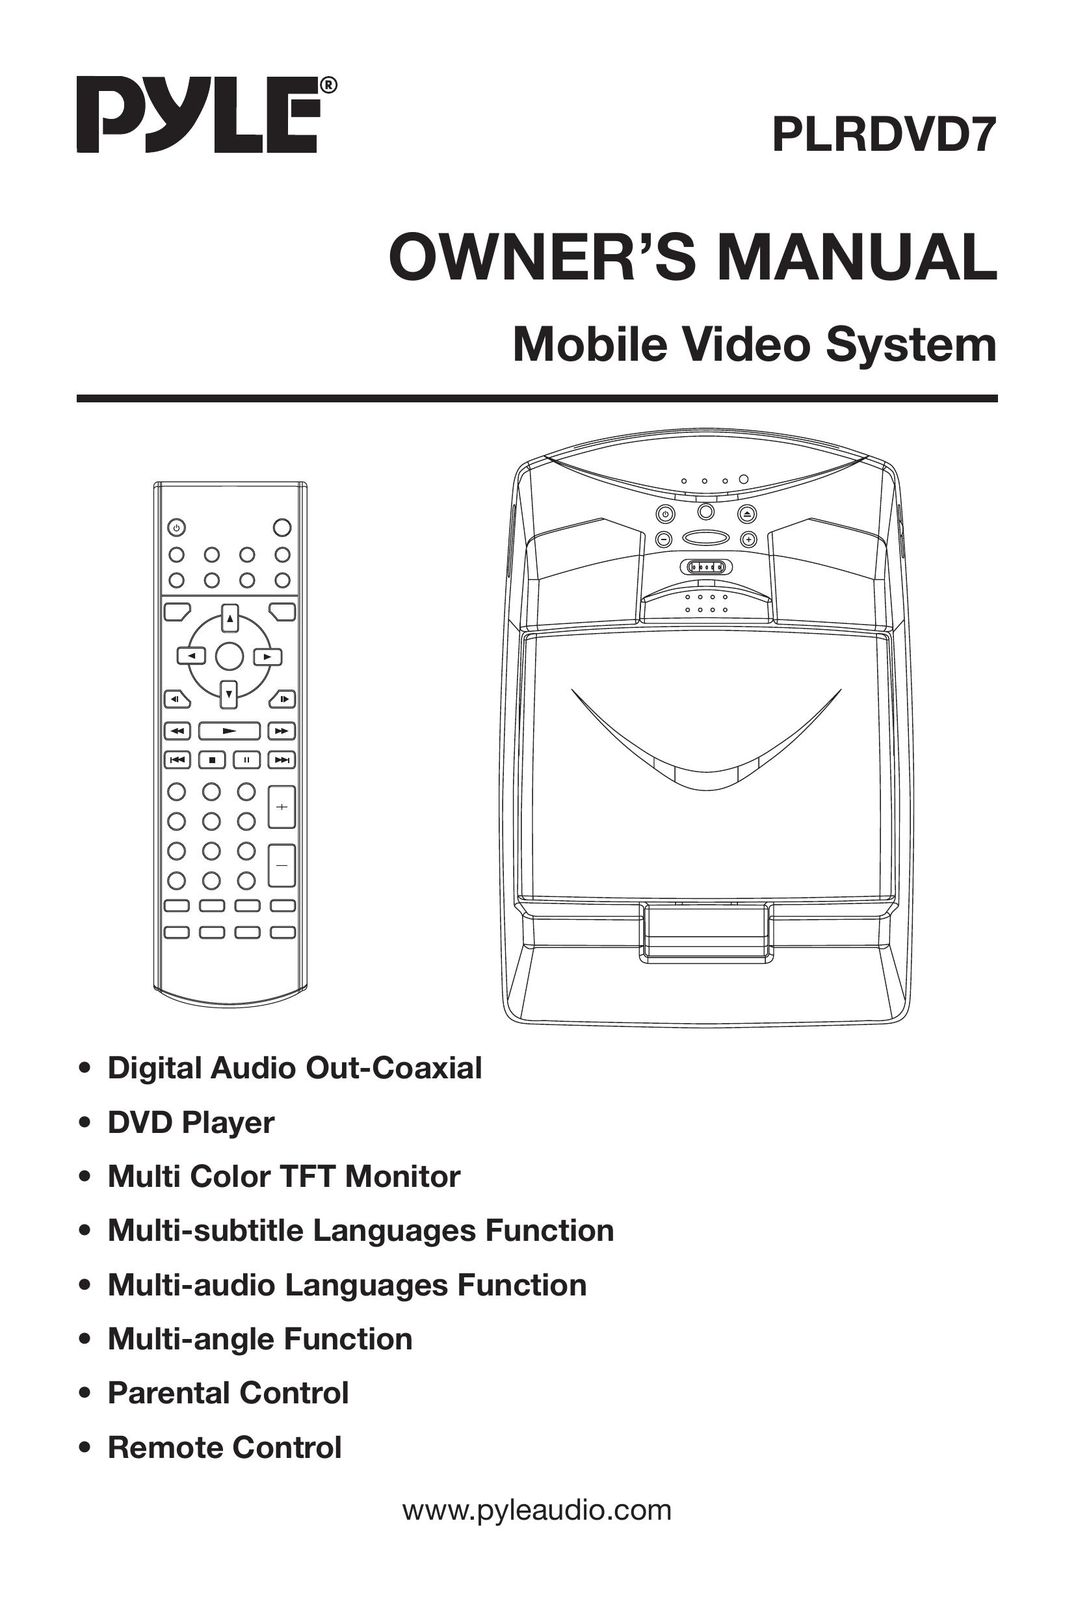 Radio Shack PLRDVD7 Car Video System User Manual